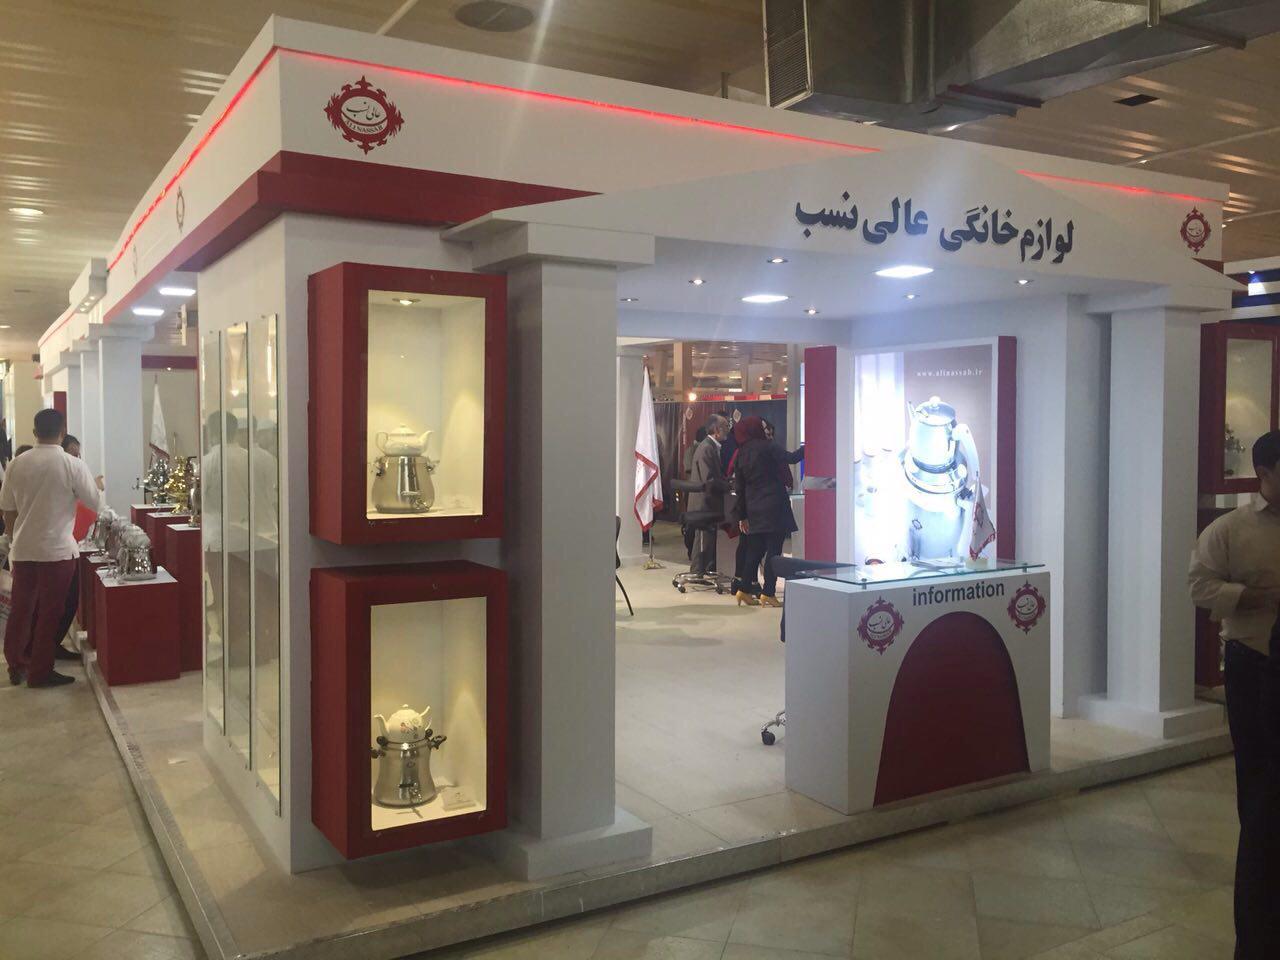 23th household international exhibition, Tabriz, IRAN